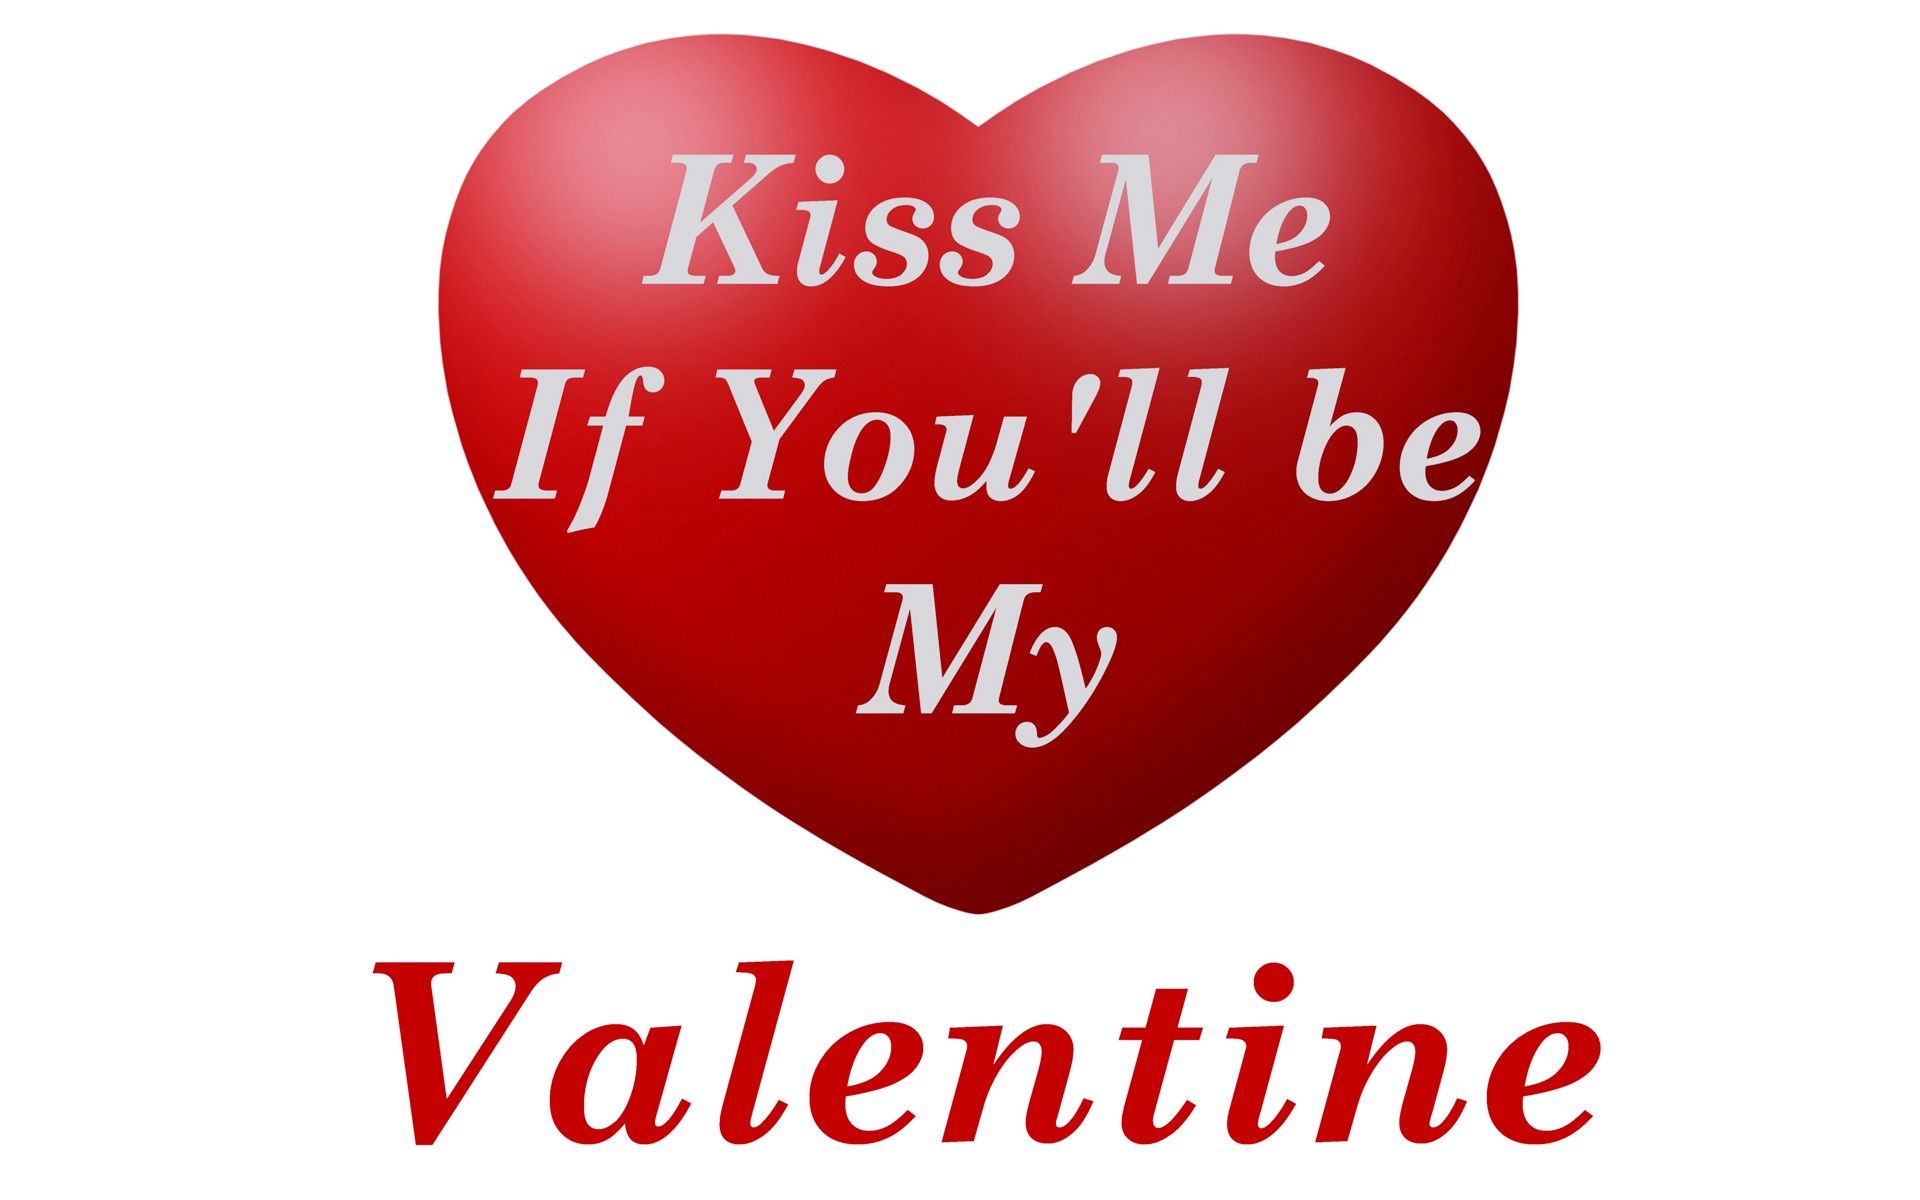 Red Love Quote Valentine Day 2021 Wallpaper Download, Wallpaper13.com